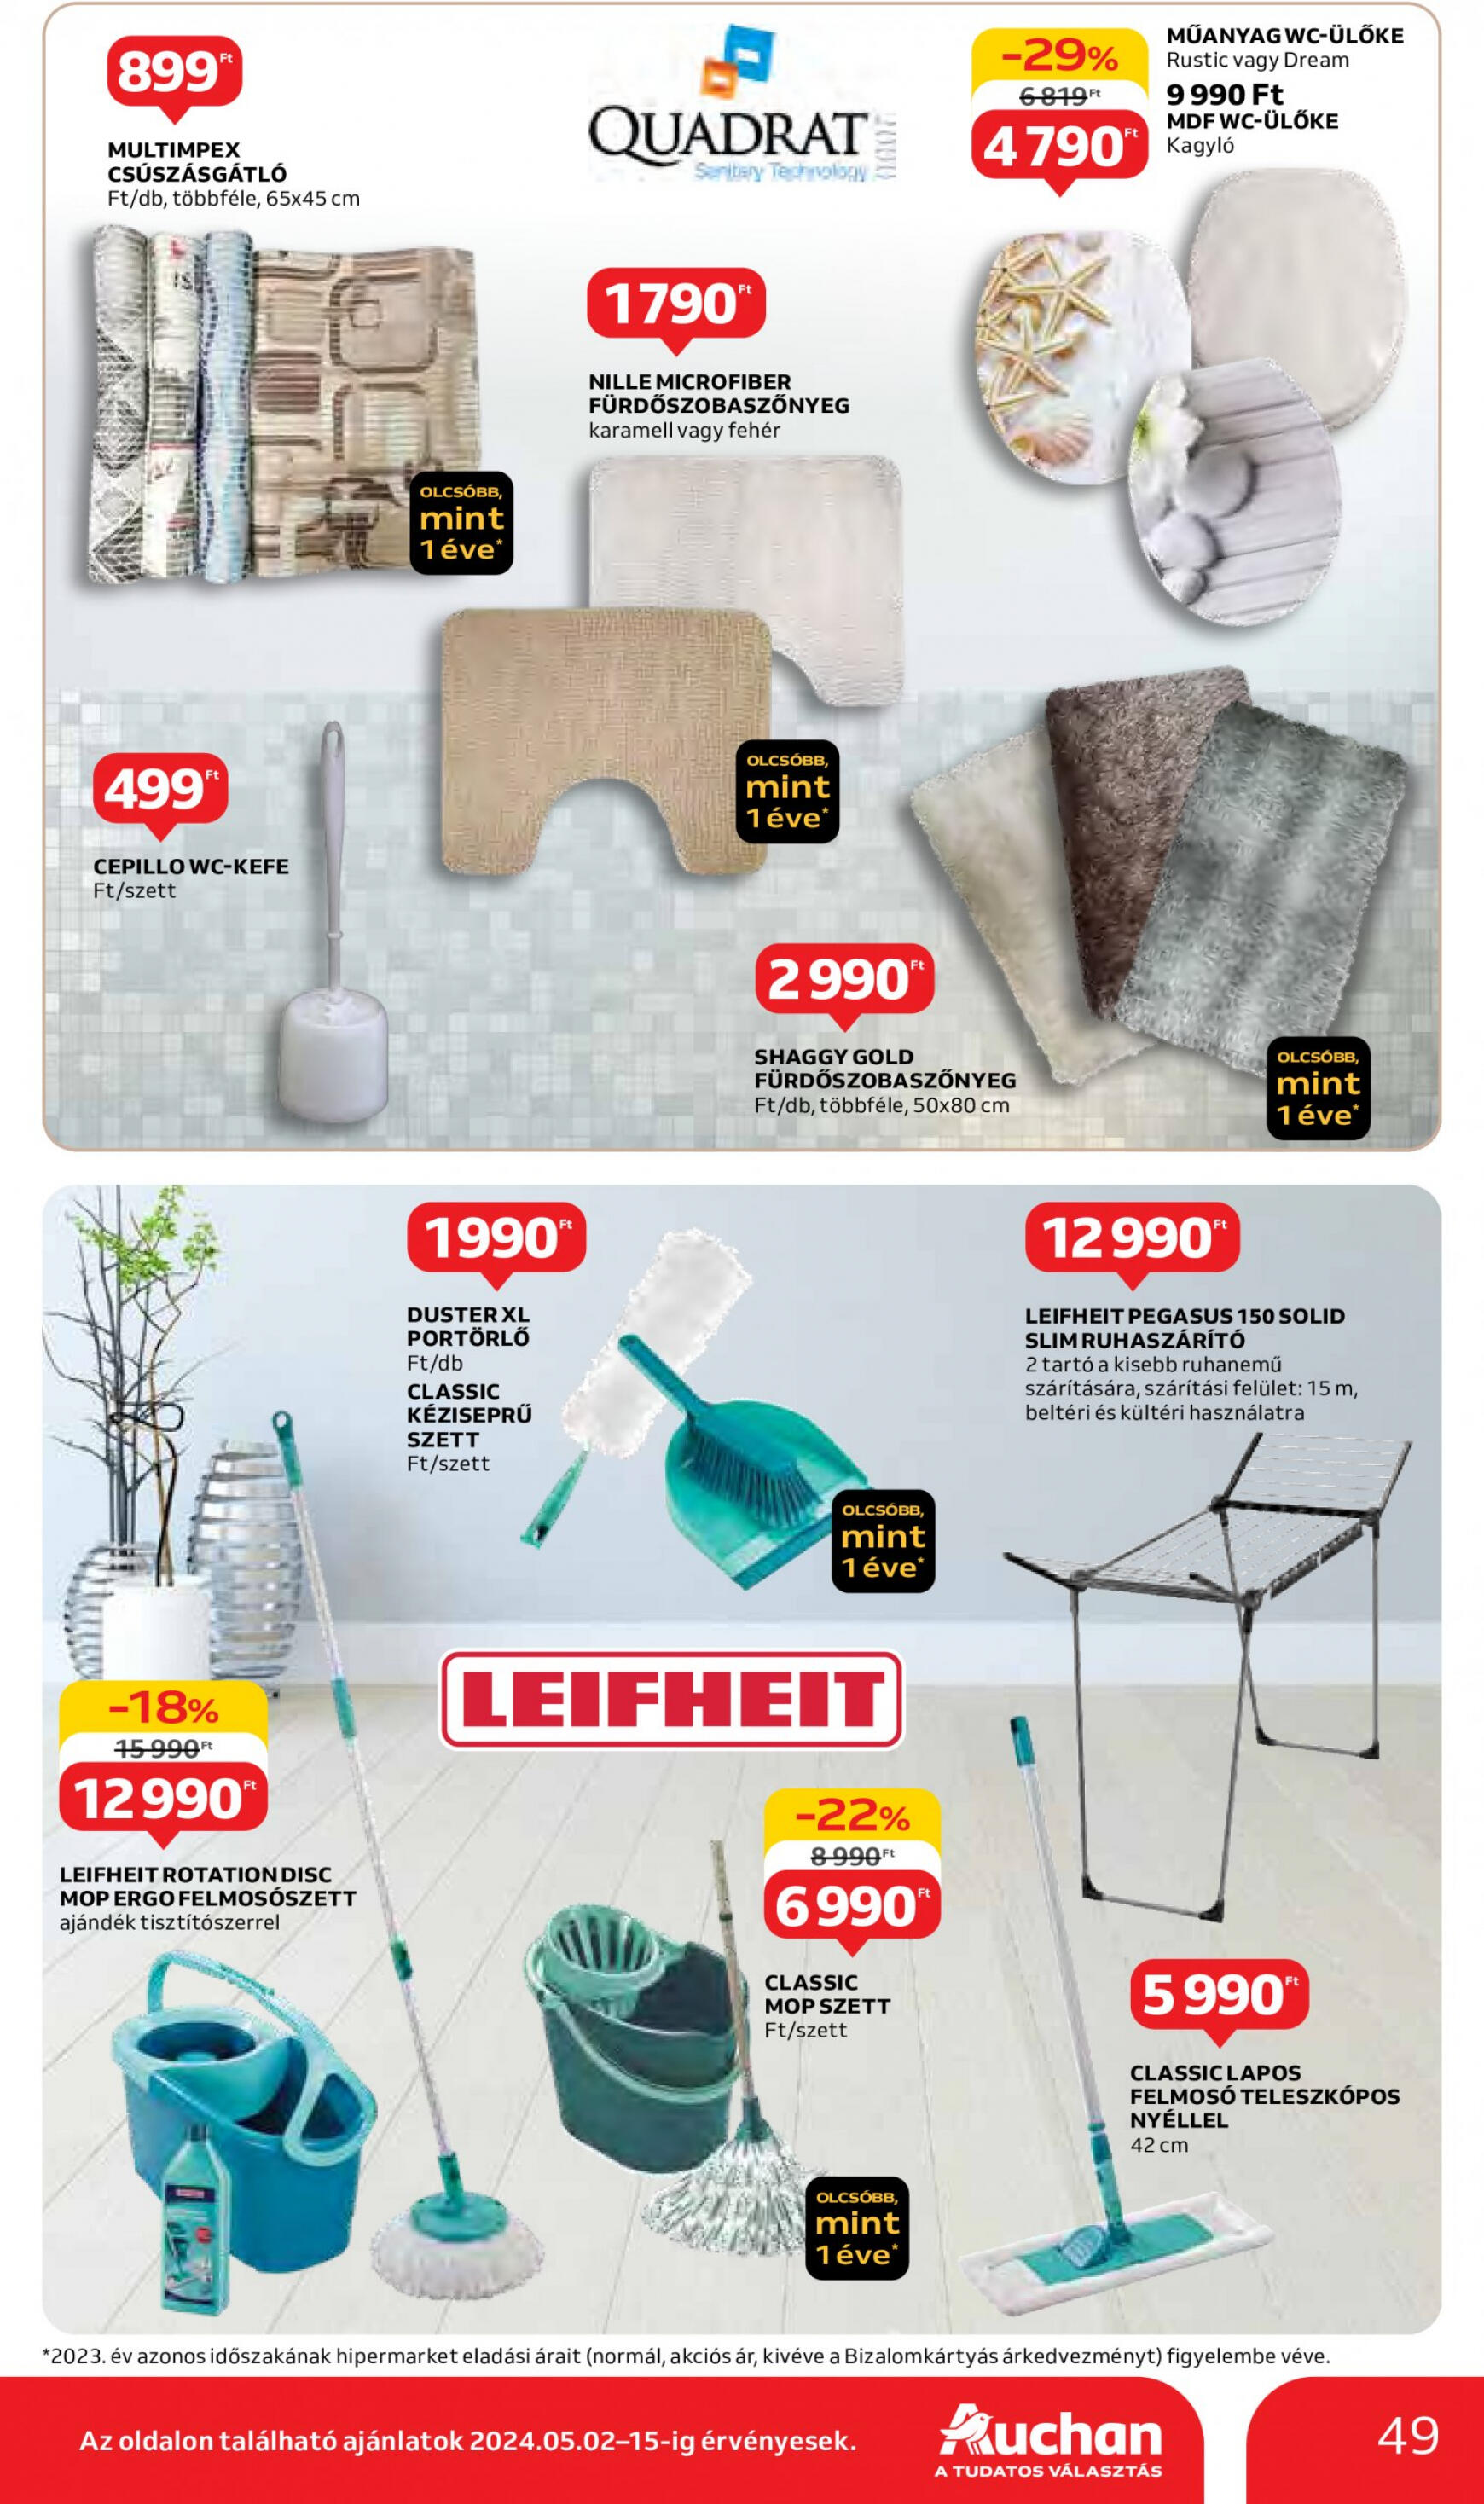 auchan - Aktuális újság Auchan 05.02. - 05.08. - page: 49